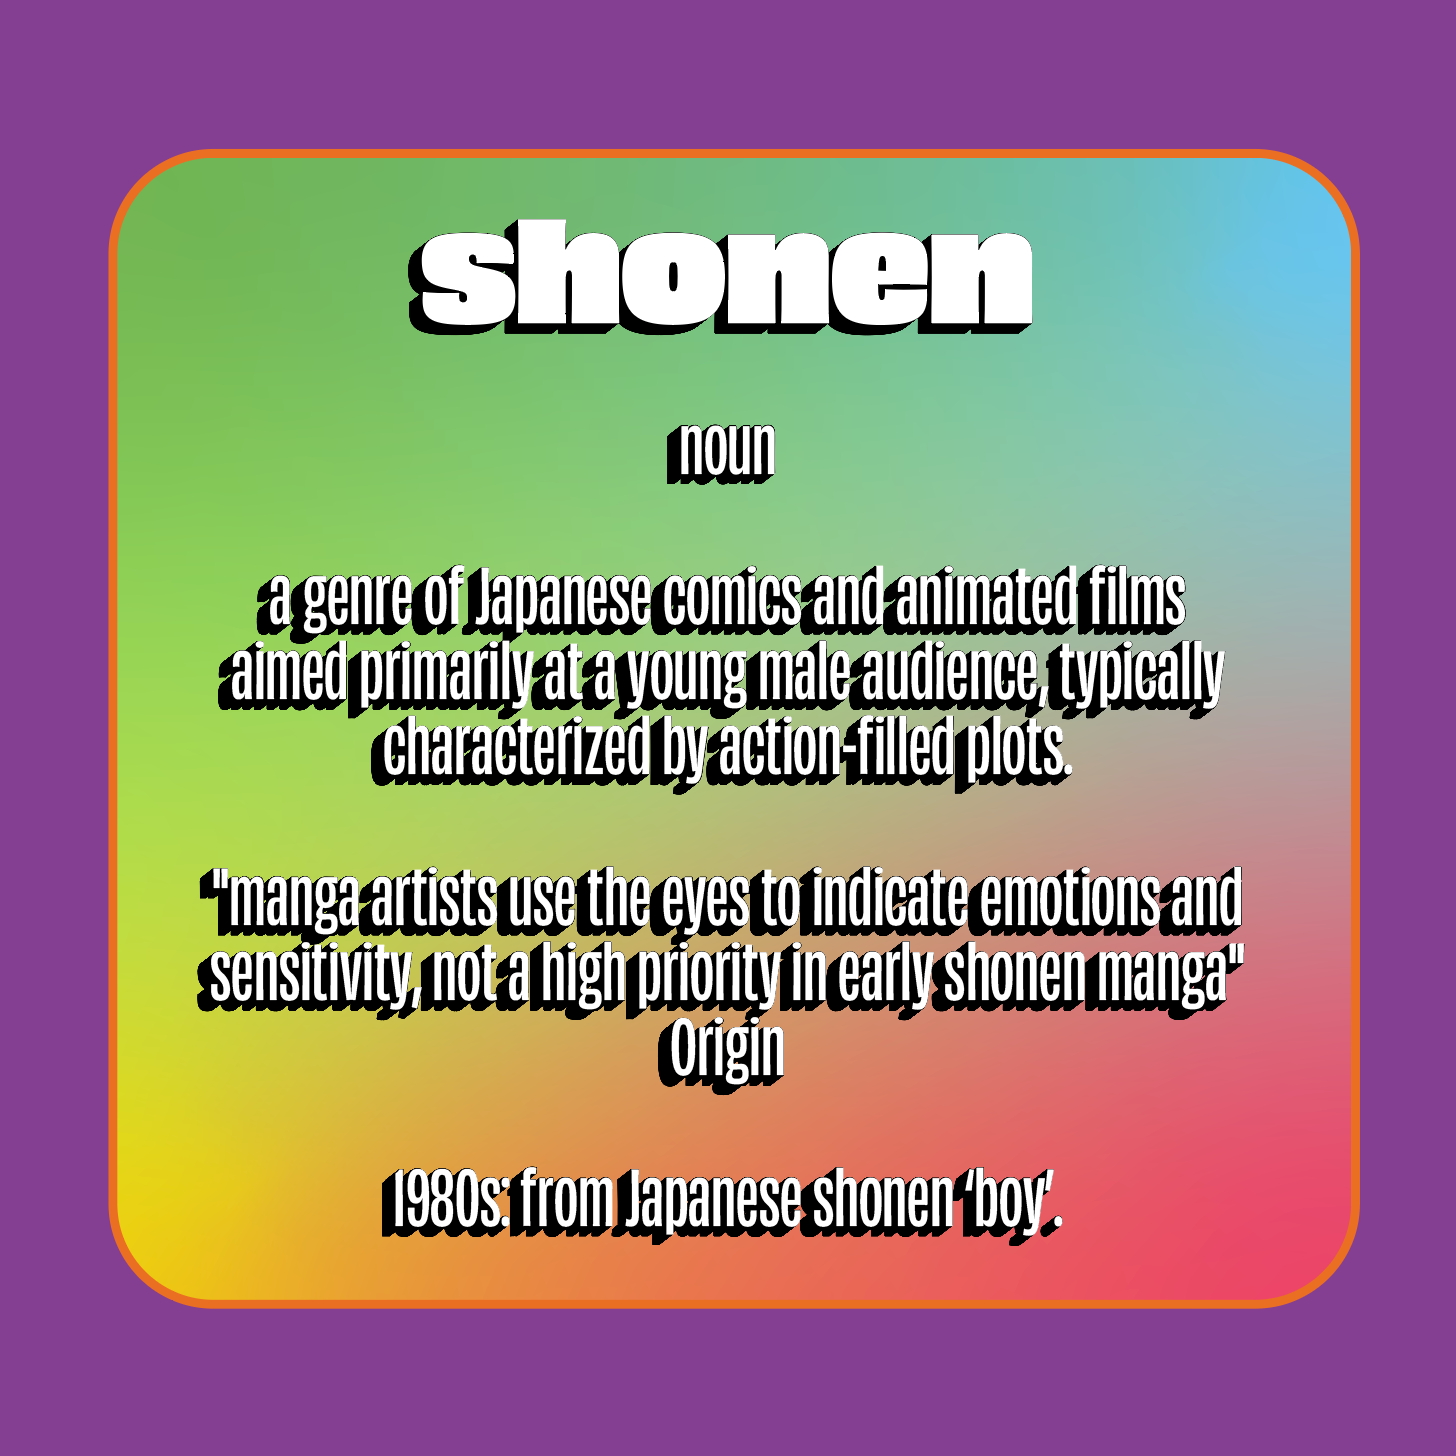 What is Shonen Anime?